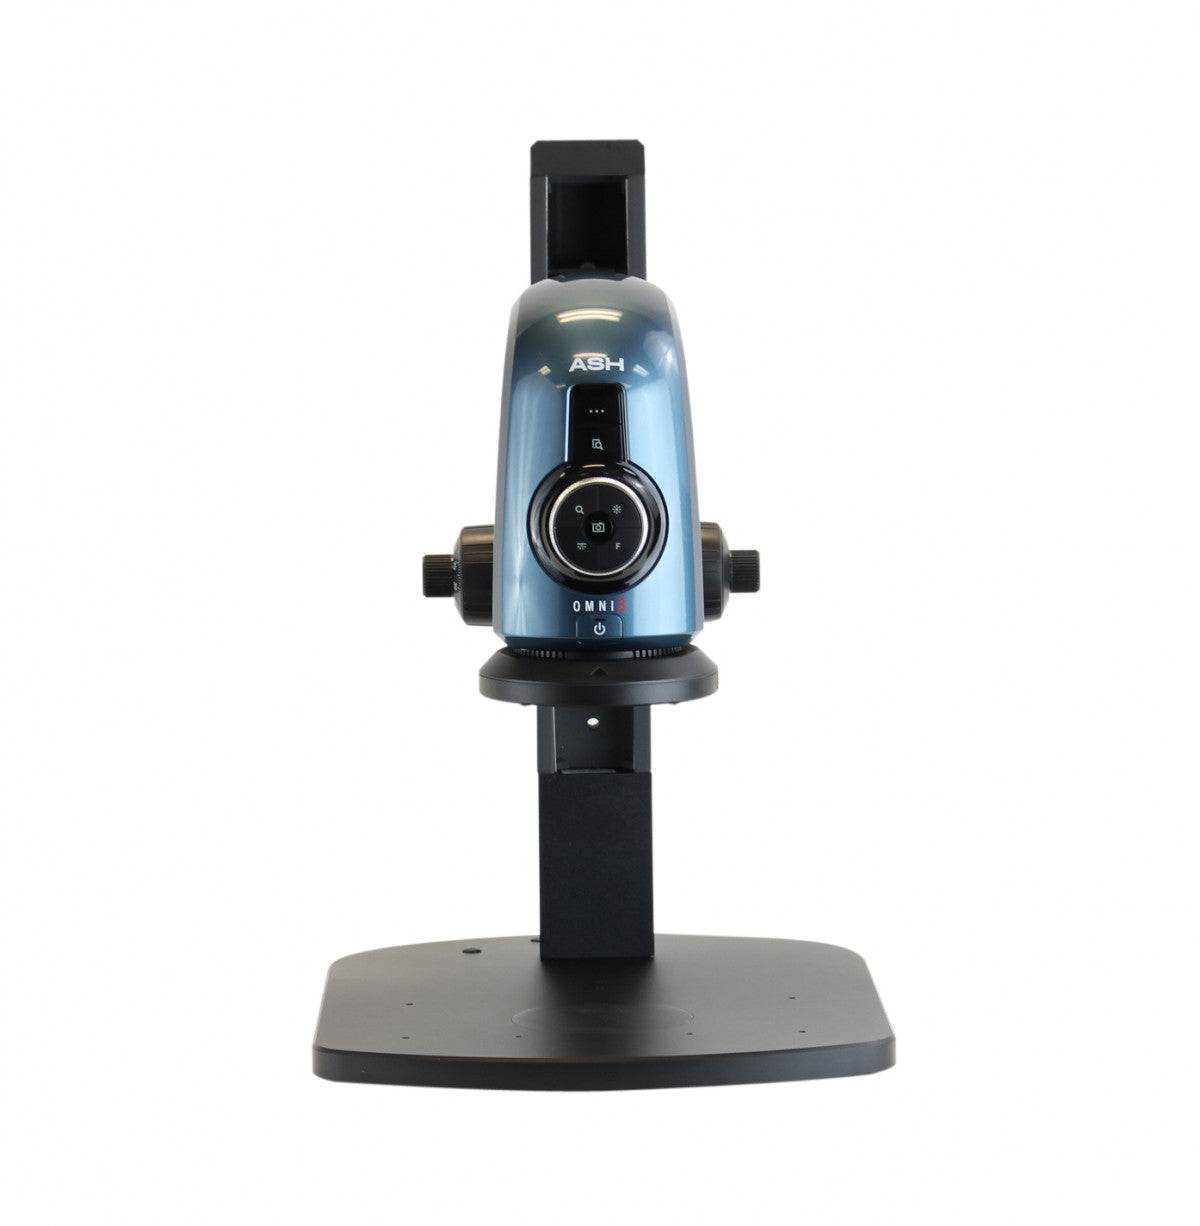 Portable Digital Microscopes by ioLight – Microscope Marketplace